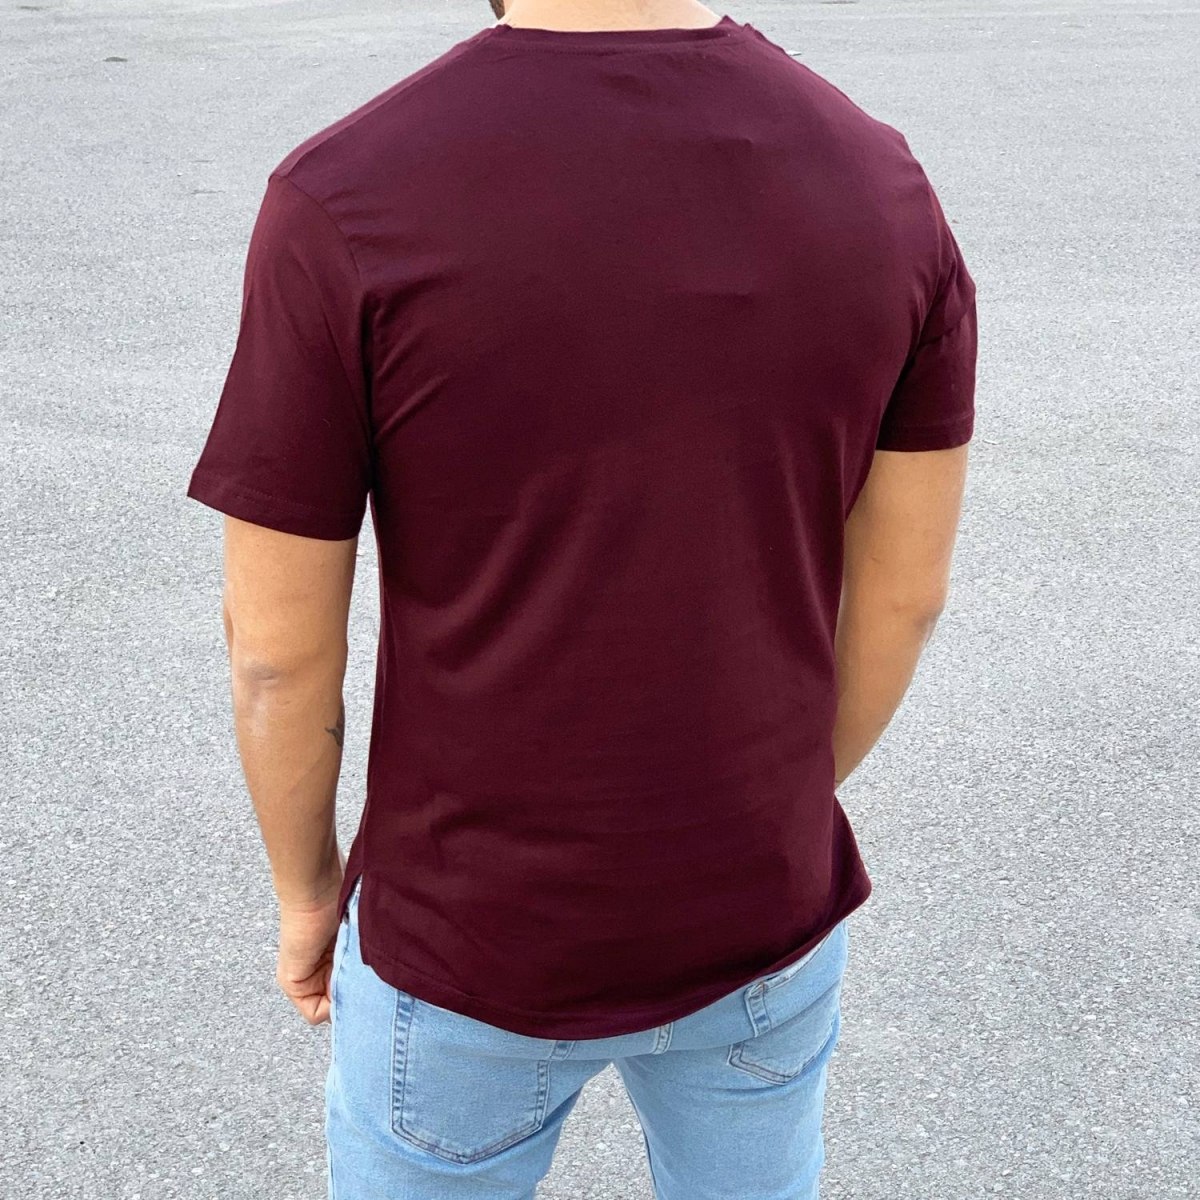 Men's Basic Round Neck T-Shirt In Claret Red - 3